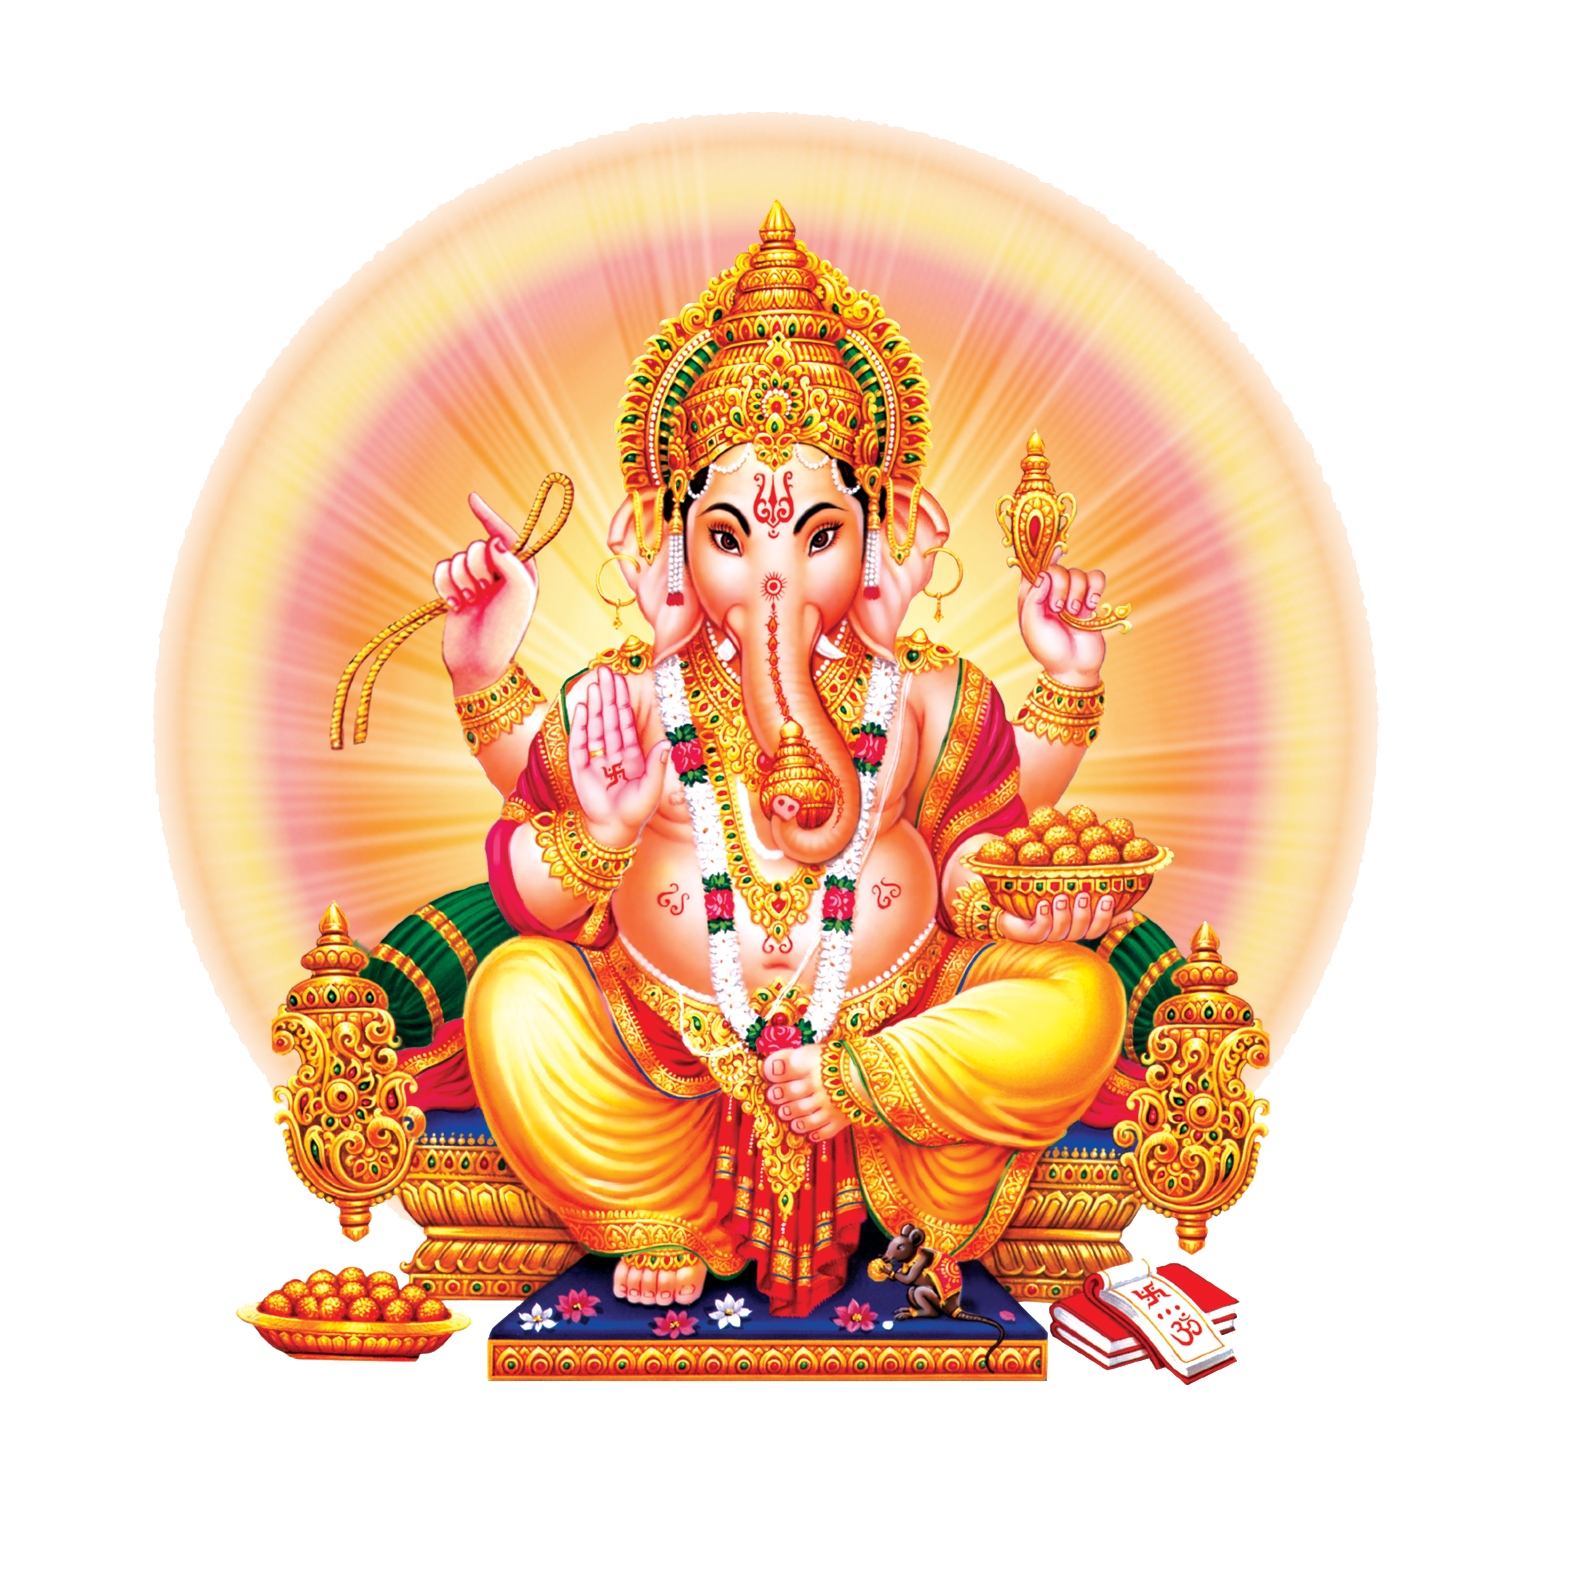 Lord Ganesha PNG pngteam.com